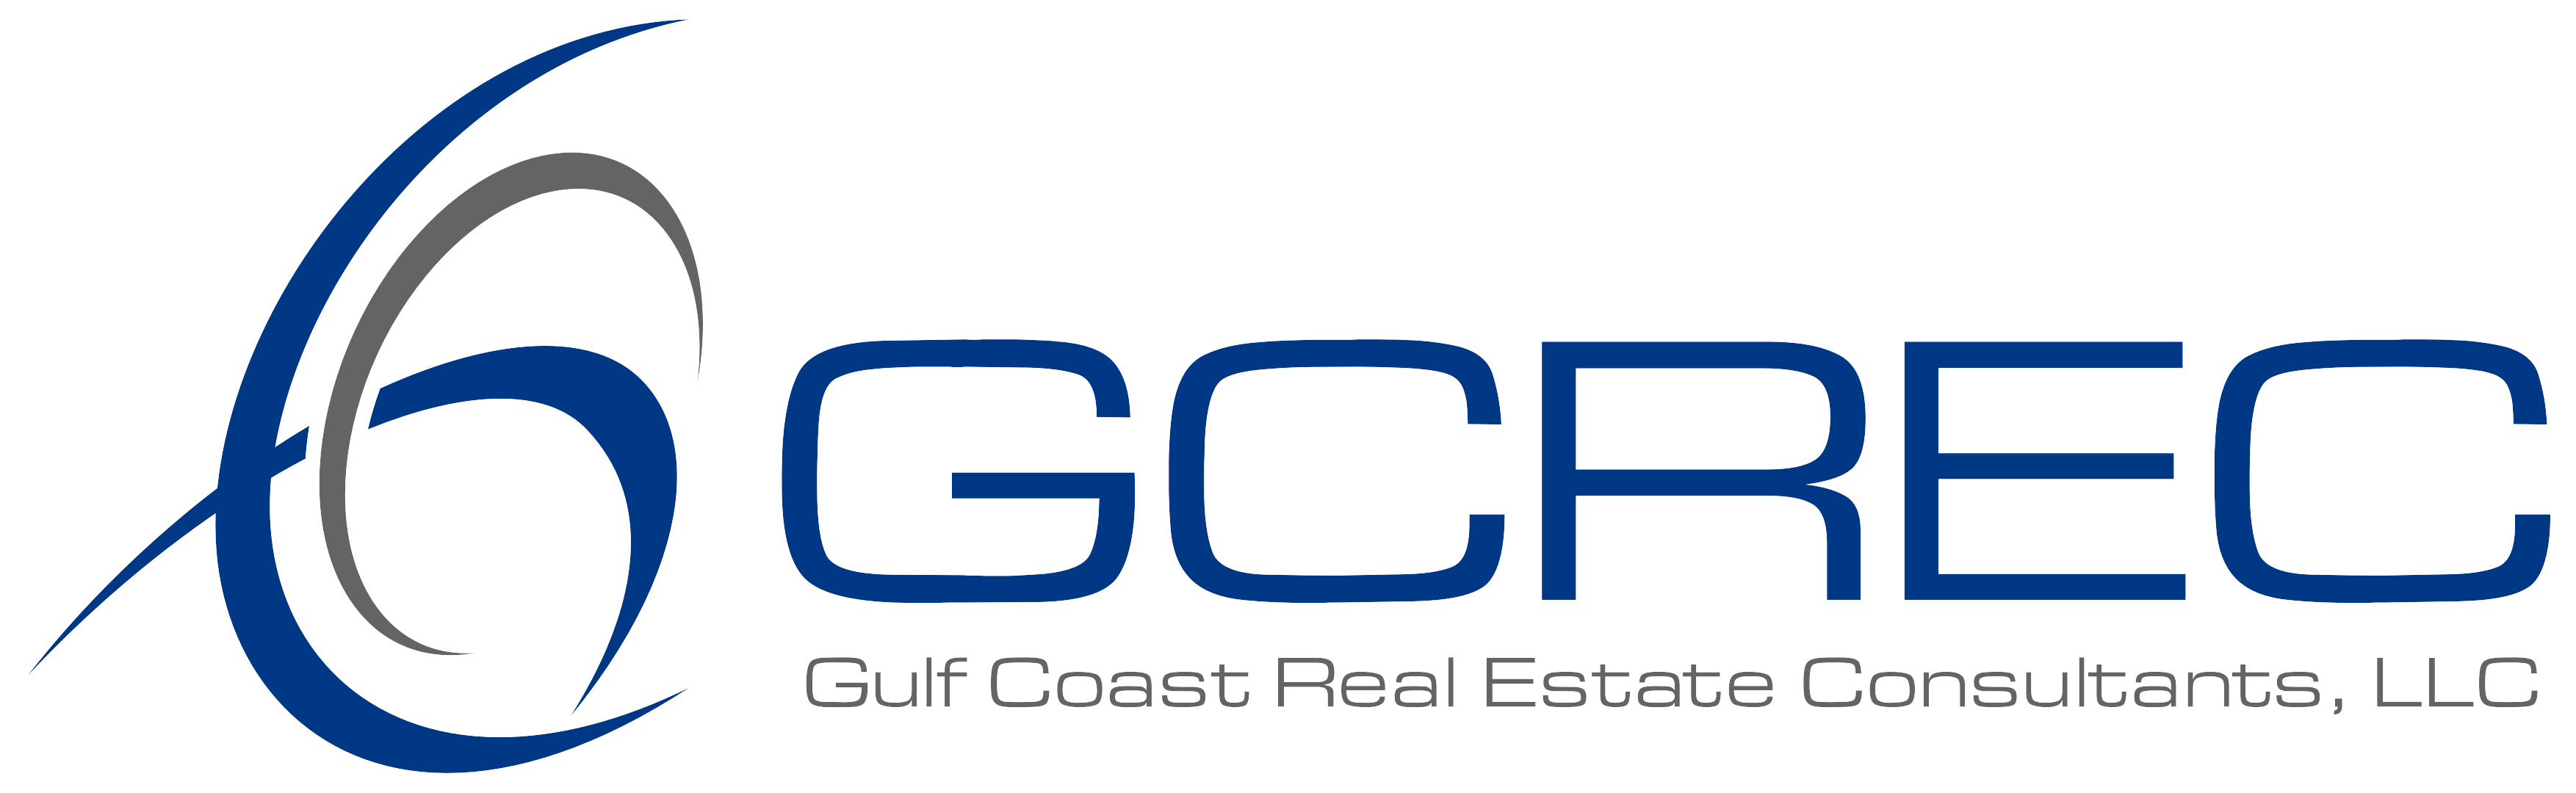 Gulf Coast Real Estate Consultants, LLC